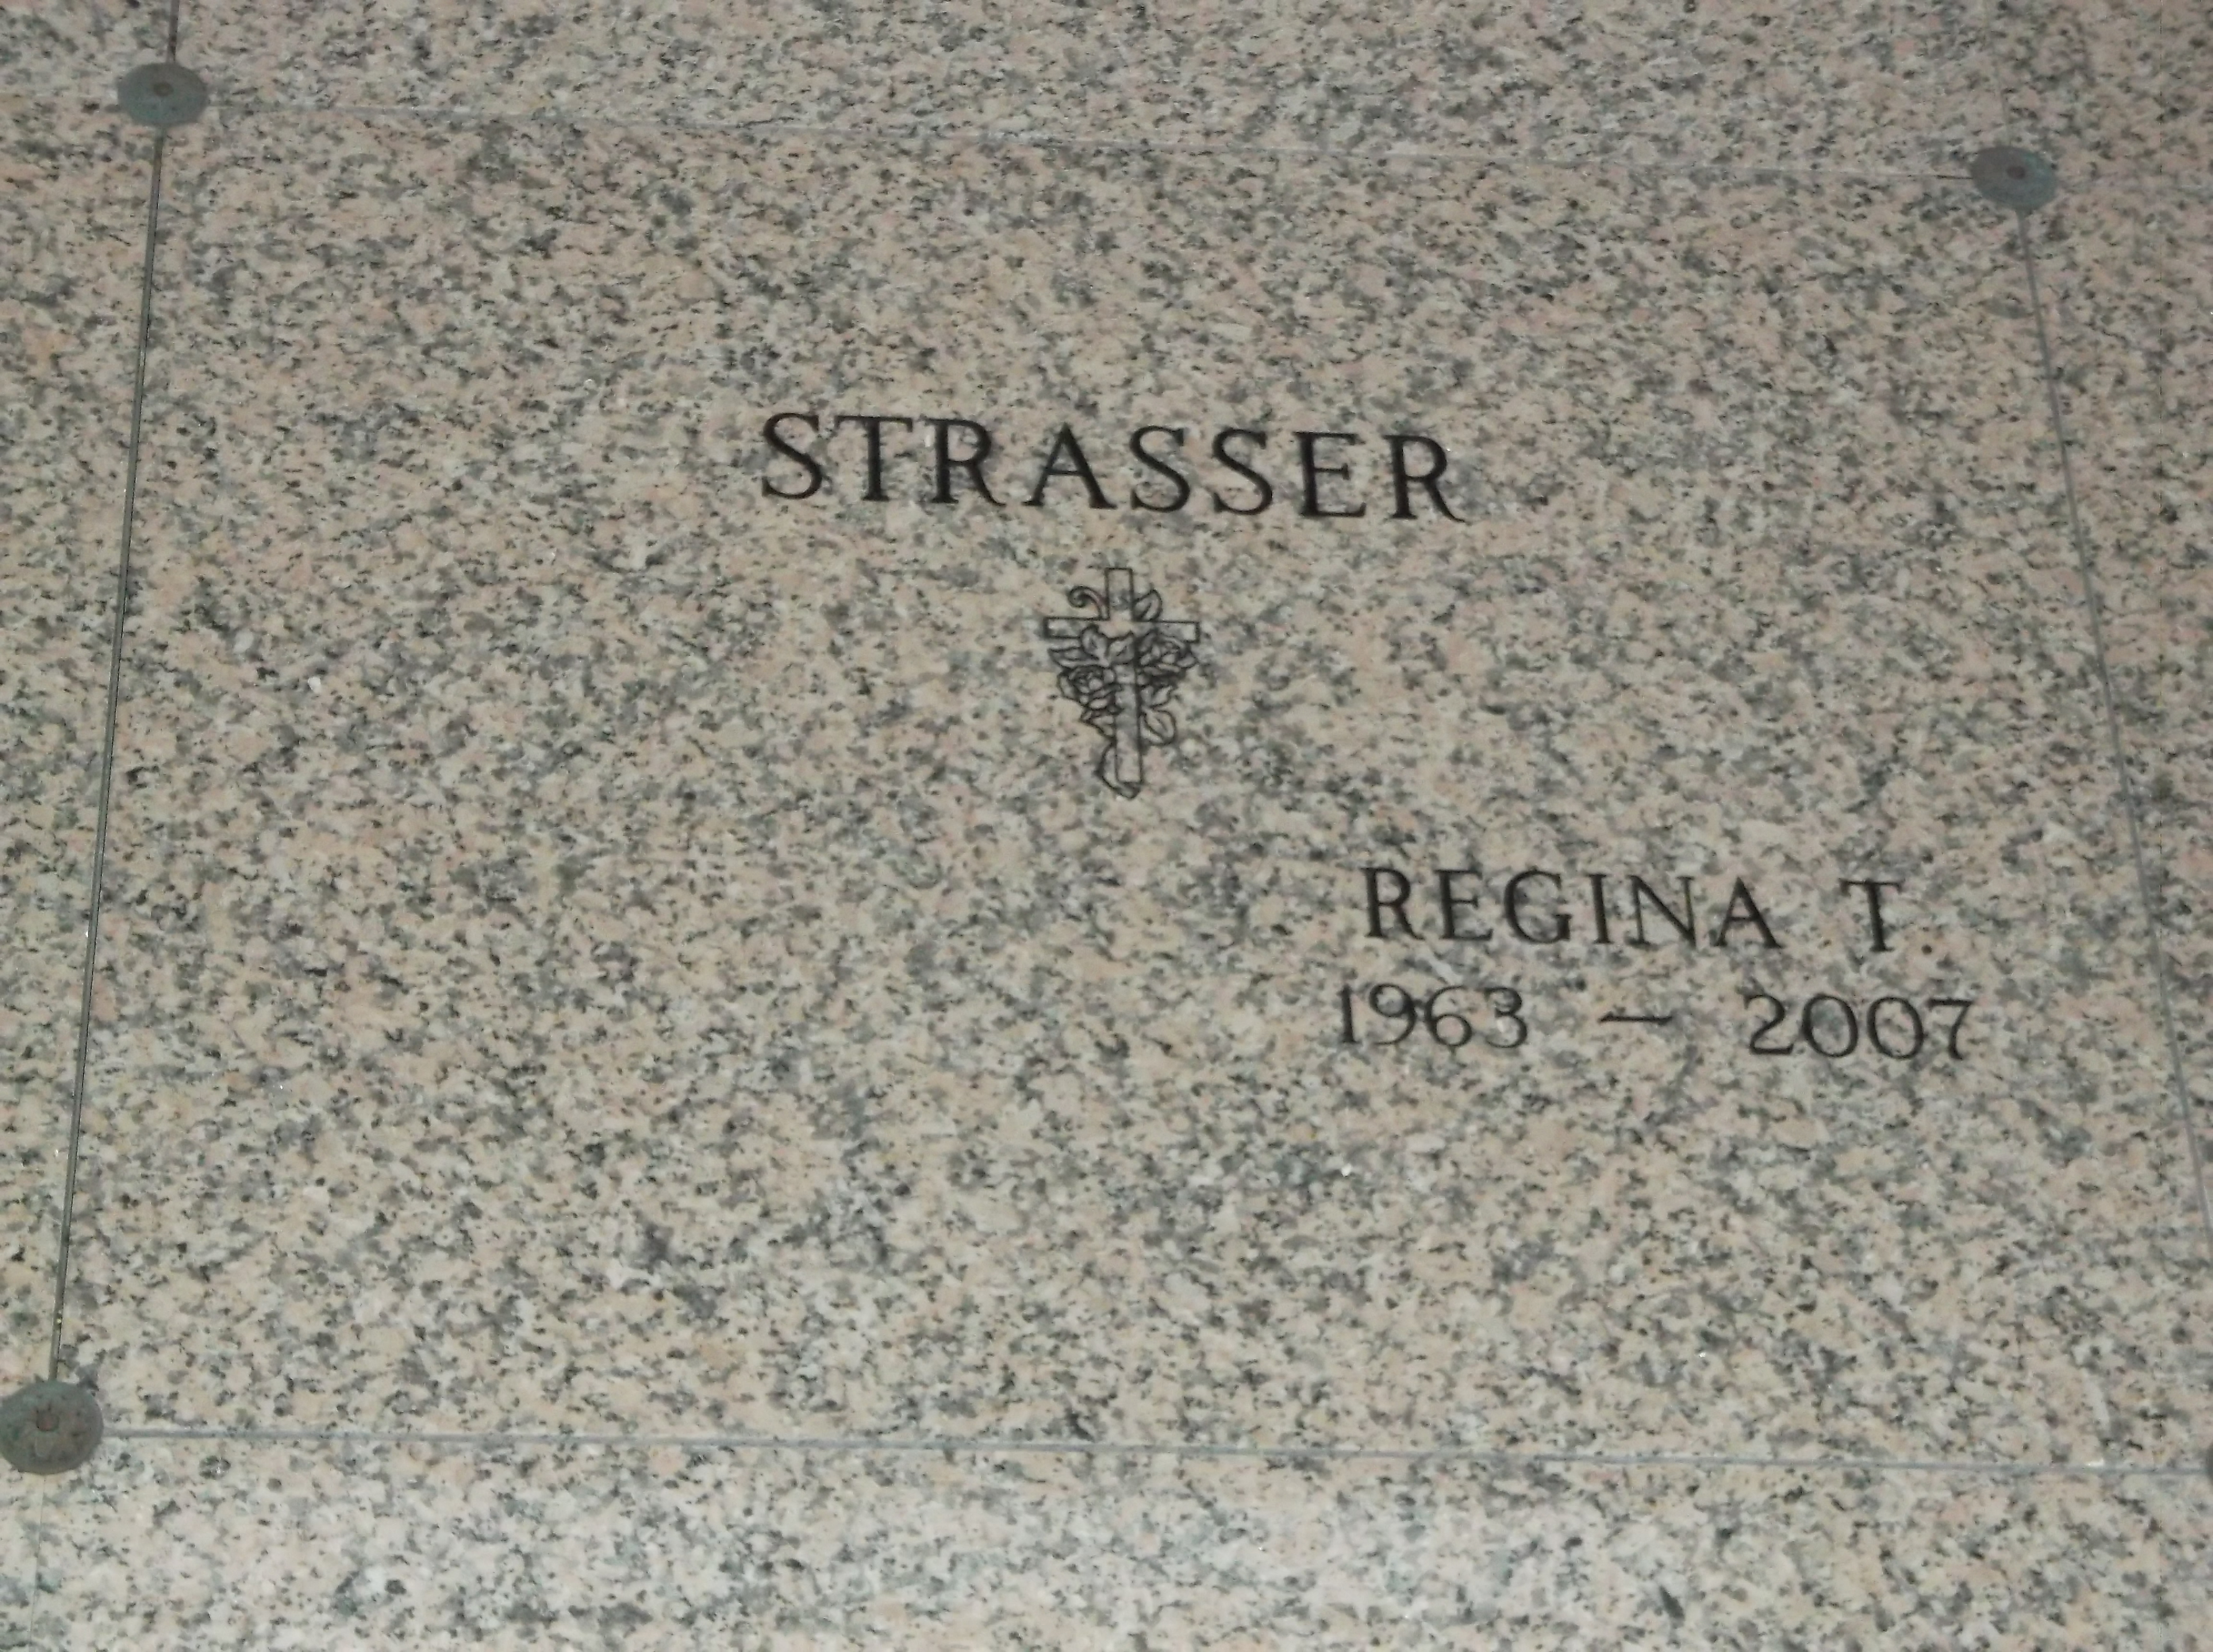 Regina T Strasser